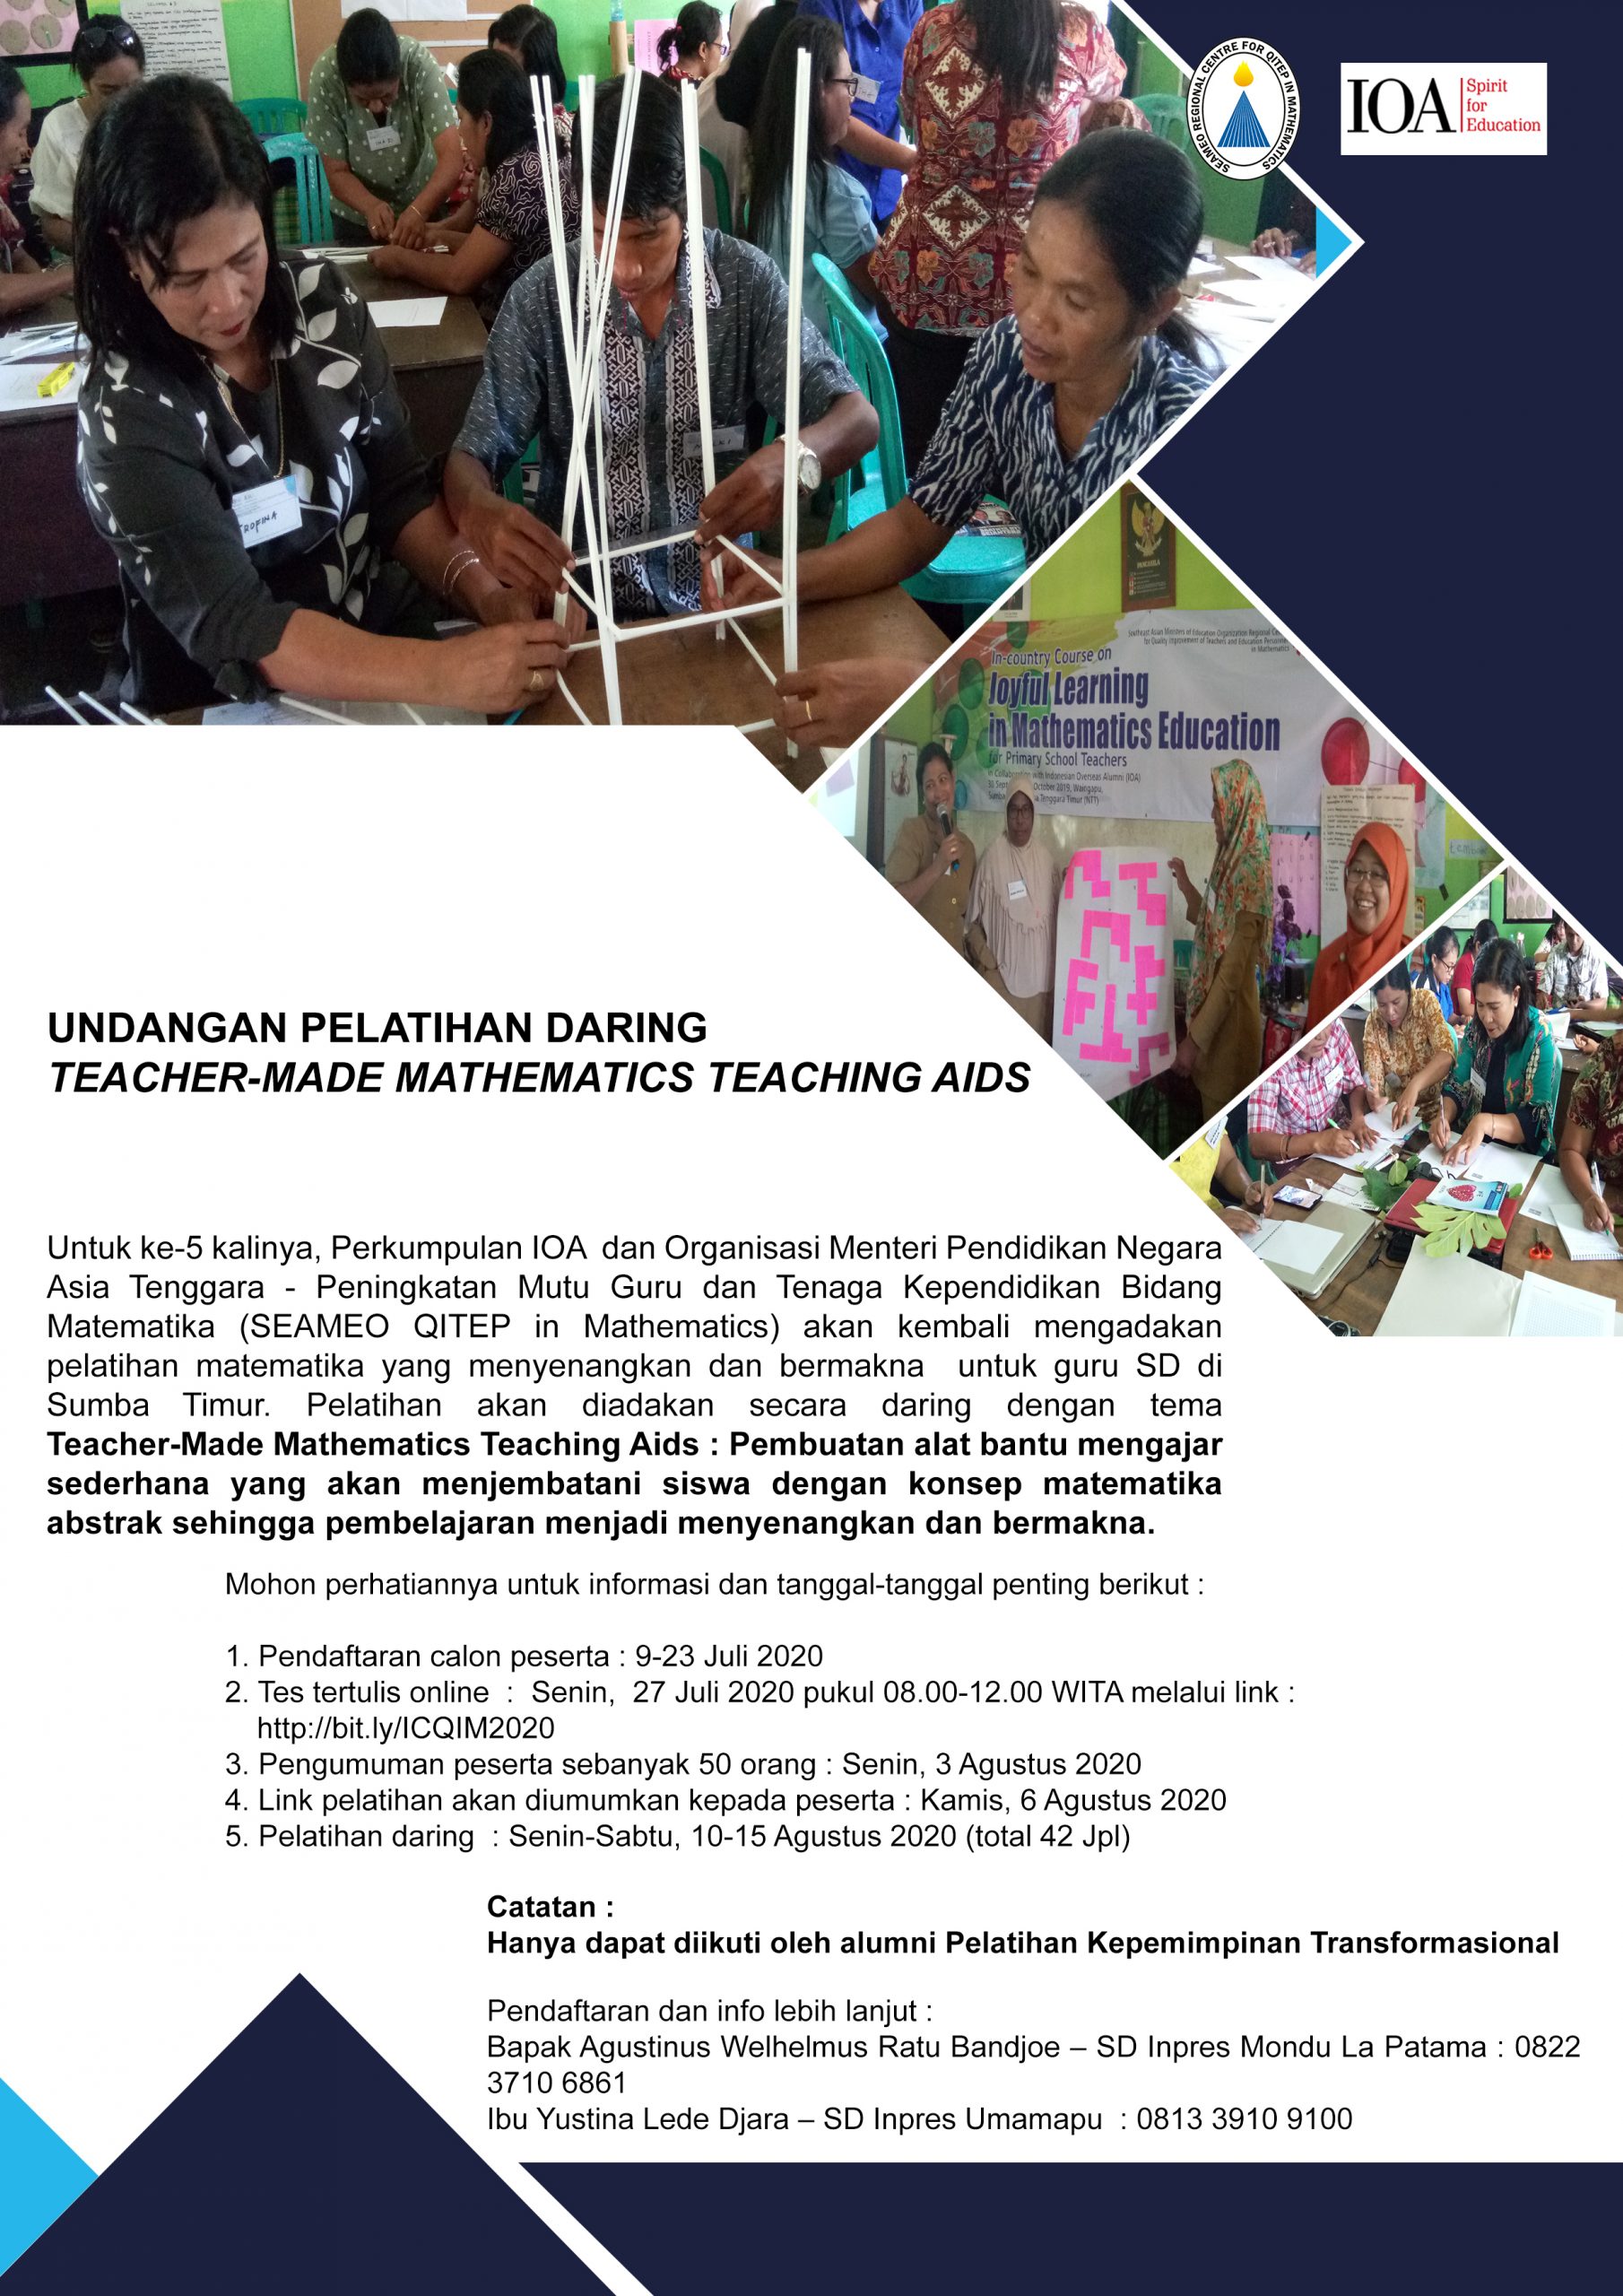 PELATIHAN DARING UNTUK GURU SUMBA TIMUR : TEACHER-MADE MATHEMATICS TEACHING AIDS, 10-15 AGUSTUS 2020